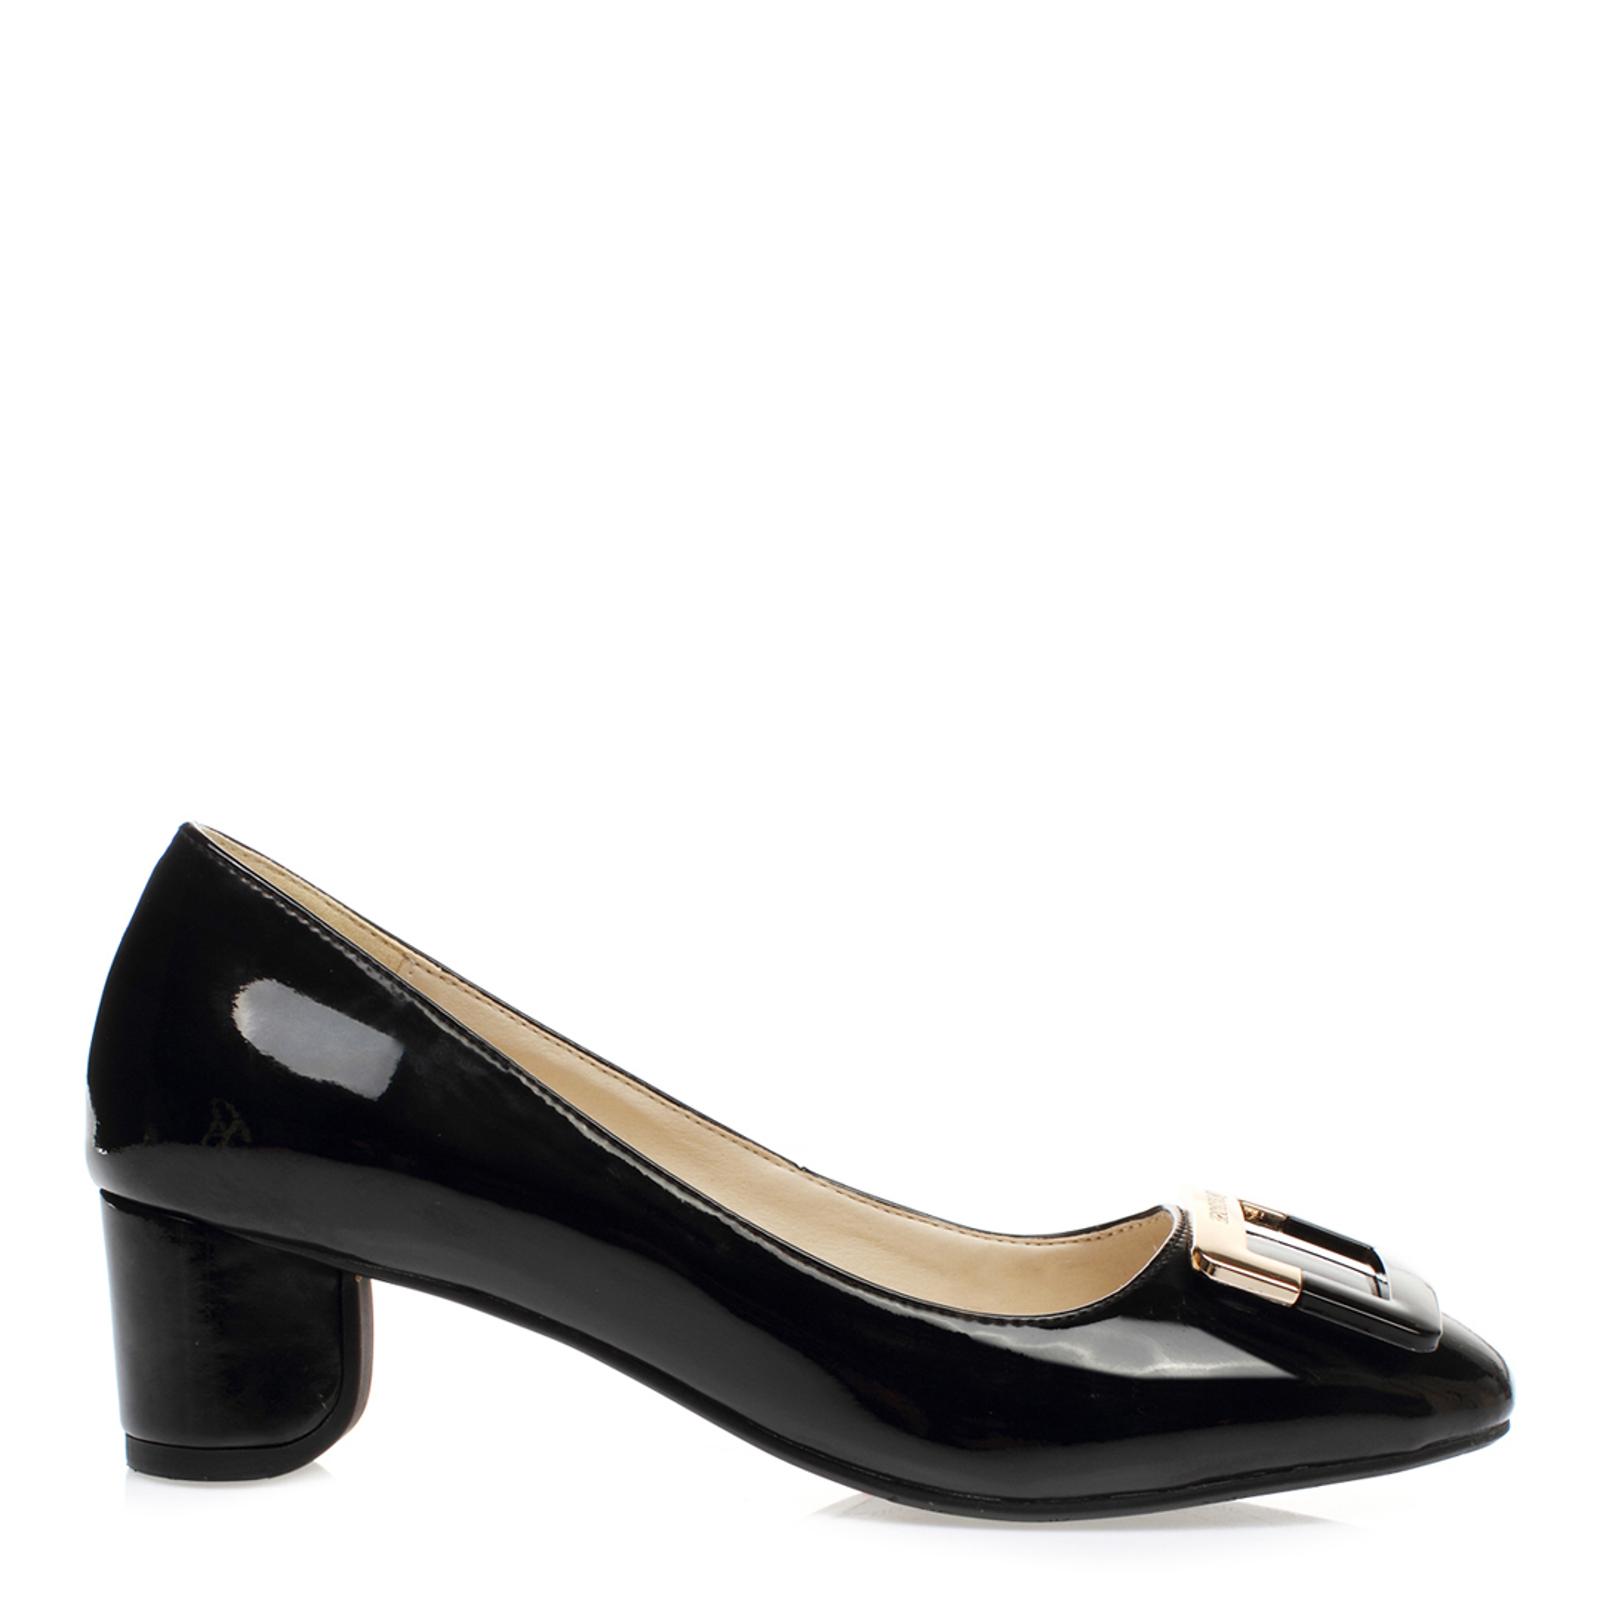 Black Leather Square Toe Shoes Heel 5cm - BrandAlley